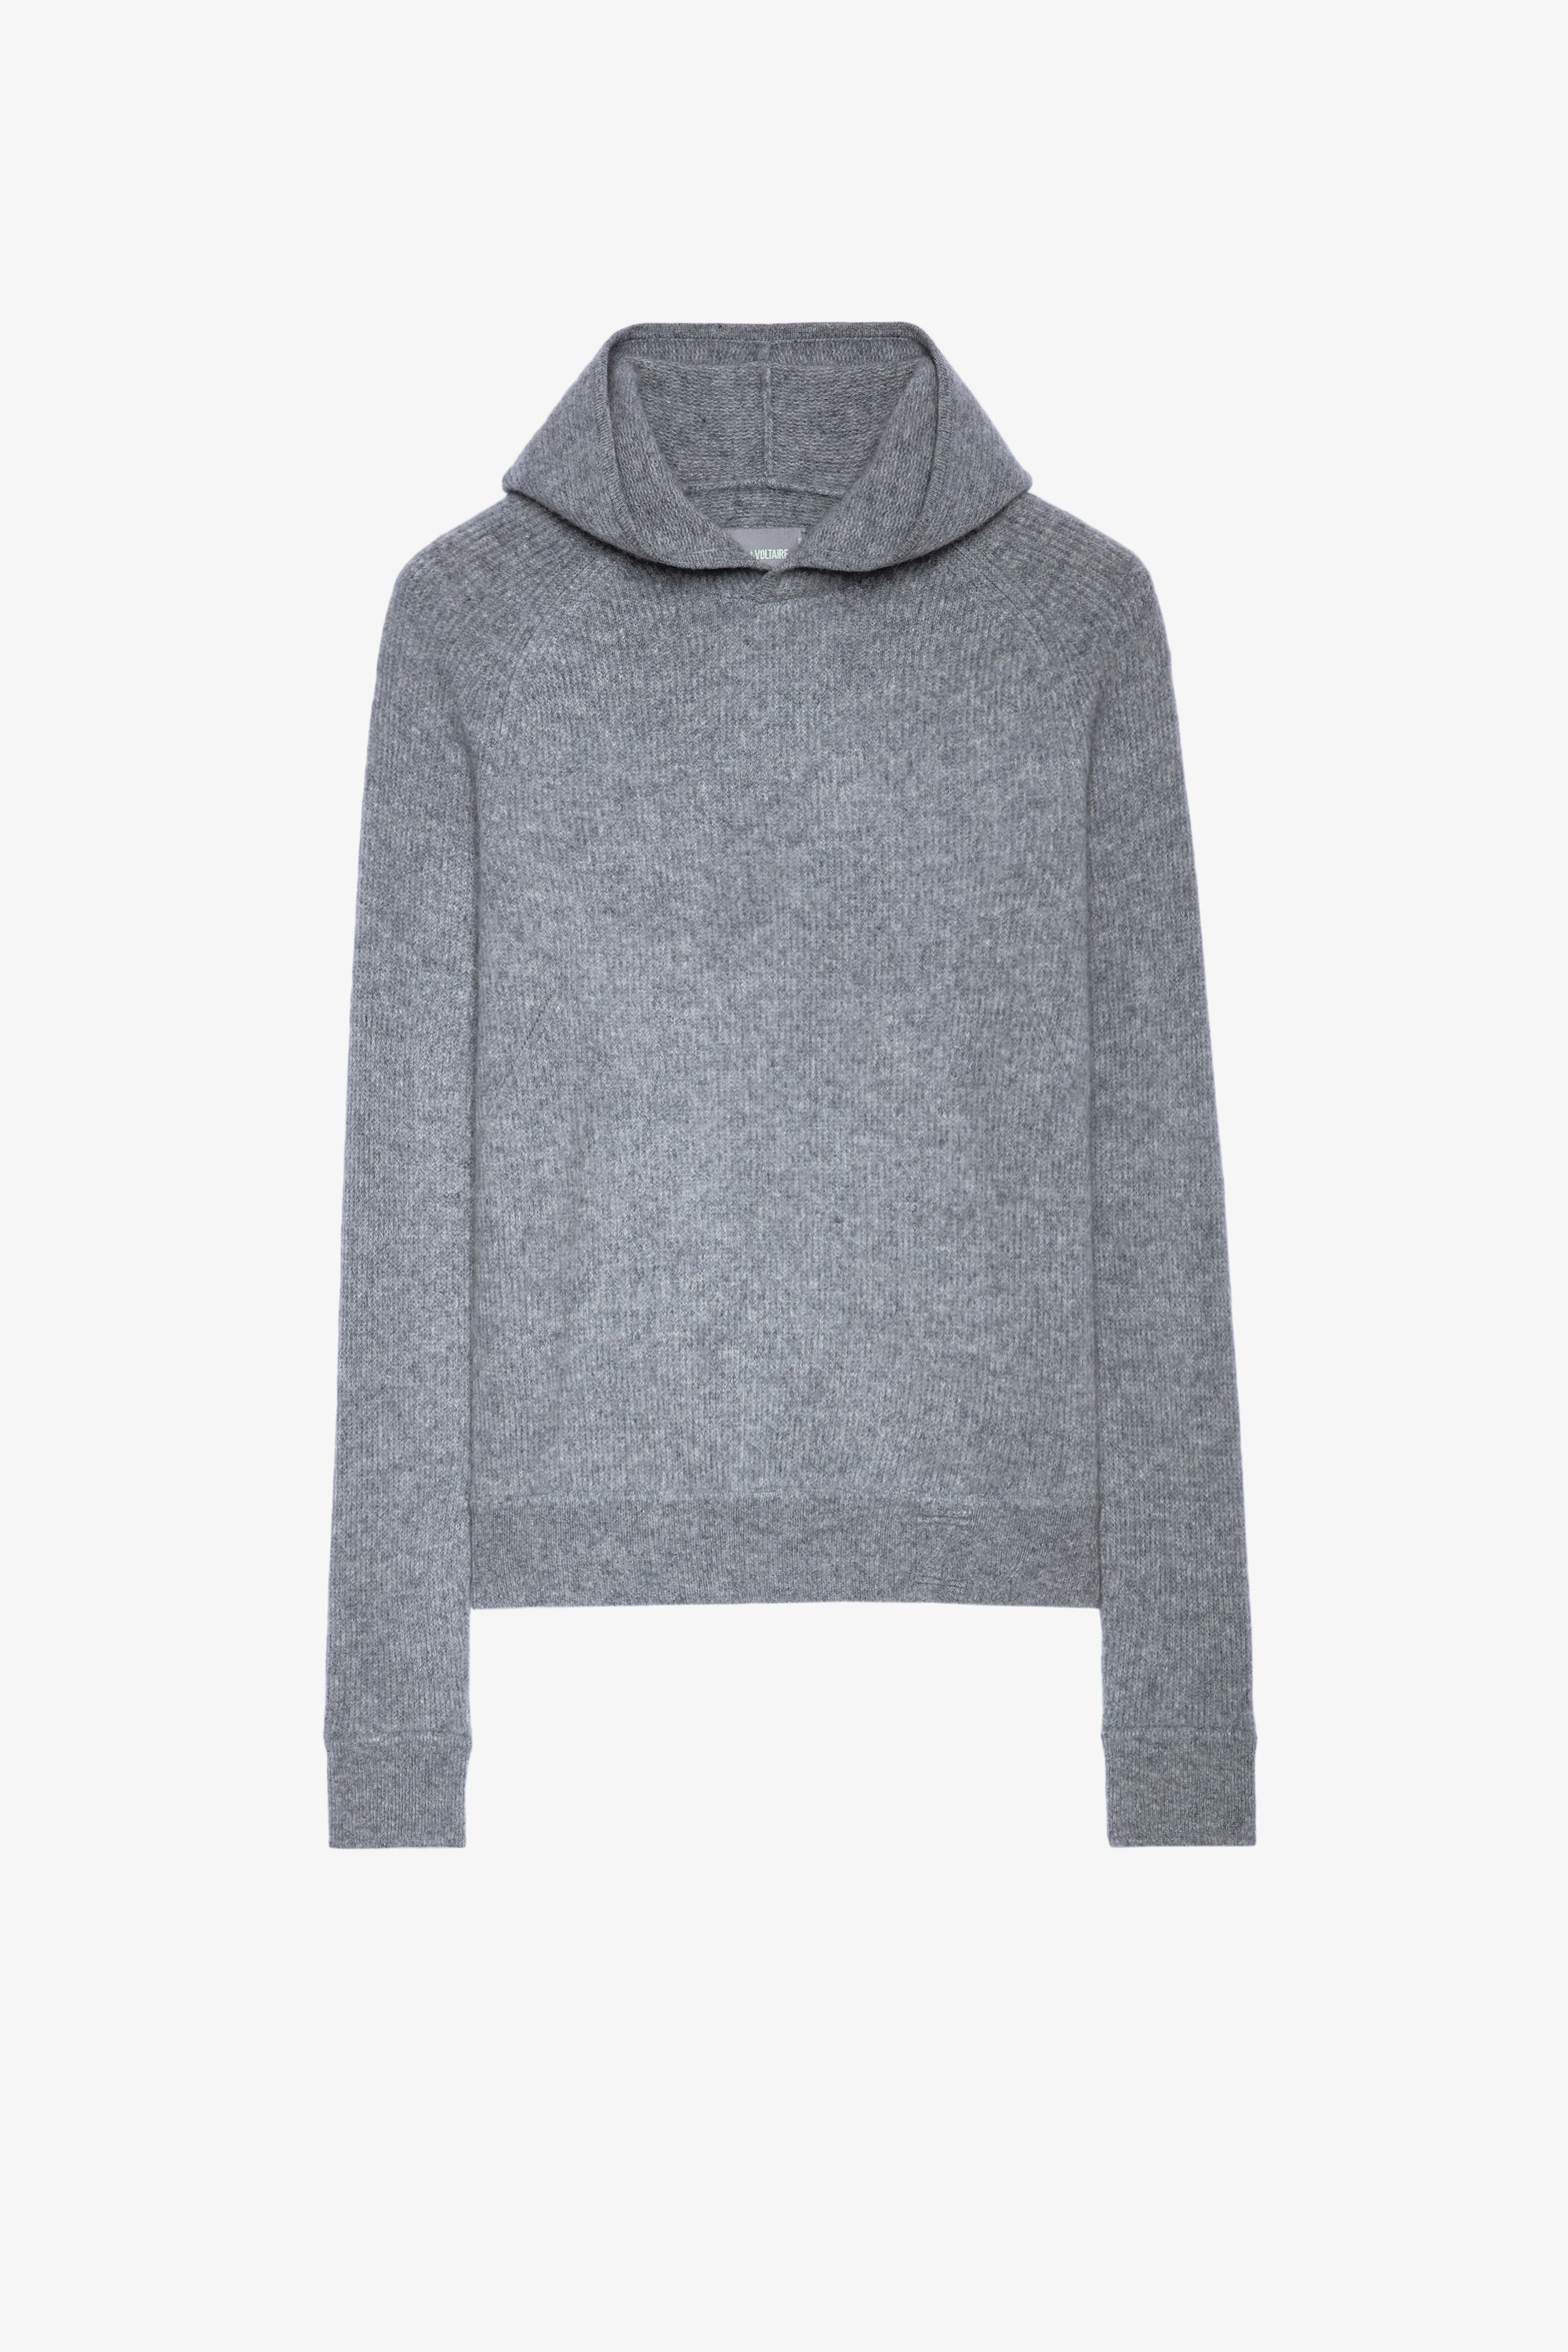 Moony カシミヤスウェット Women's gray cashmere hoodie